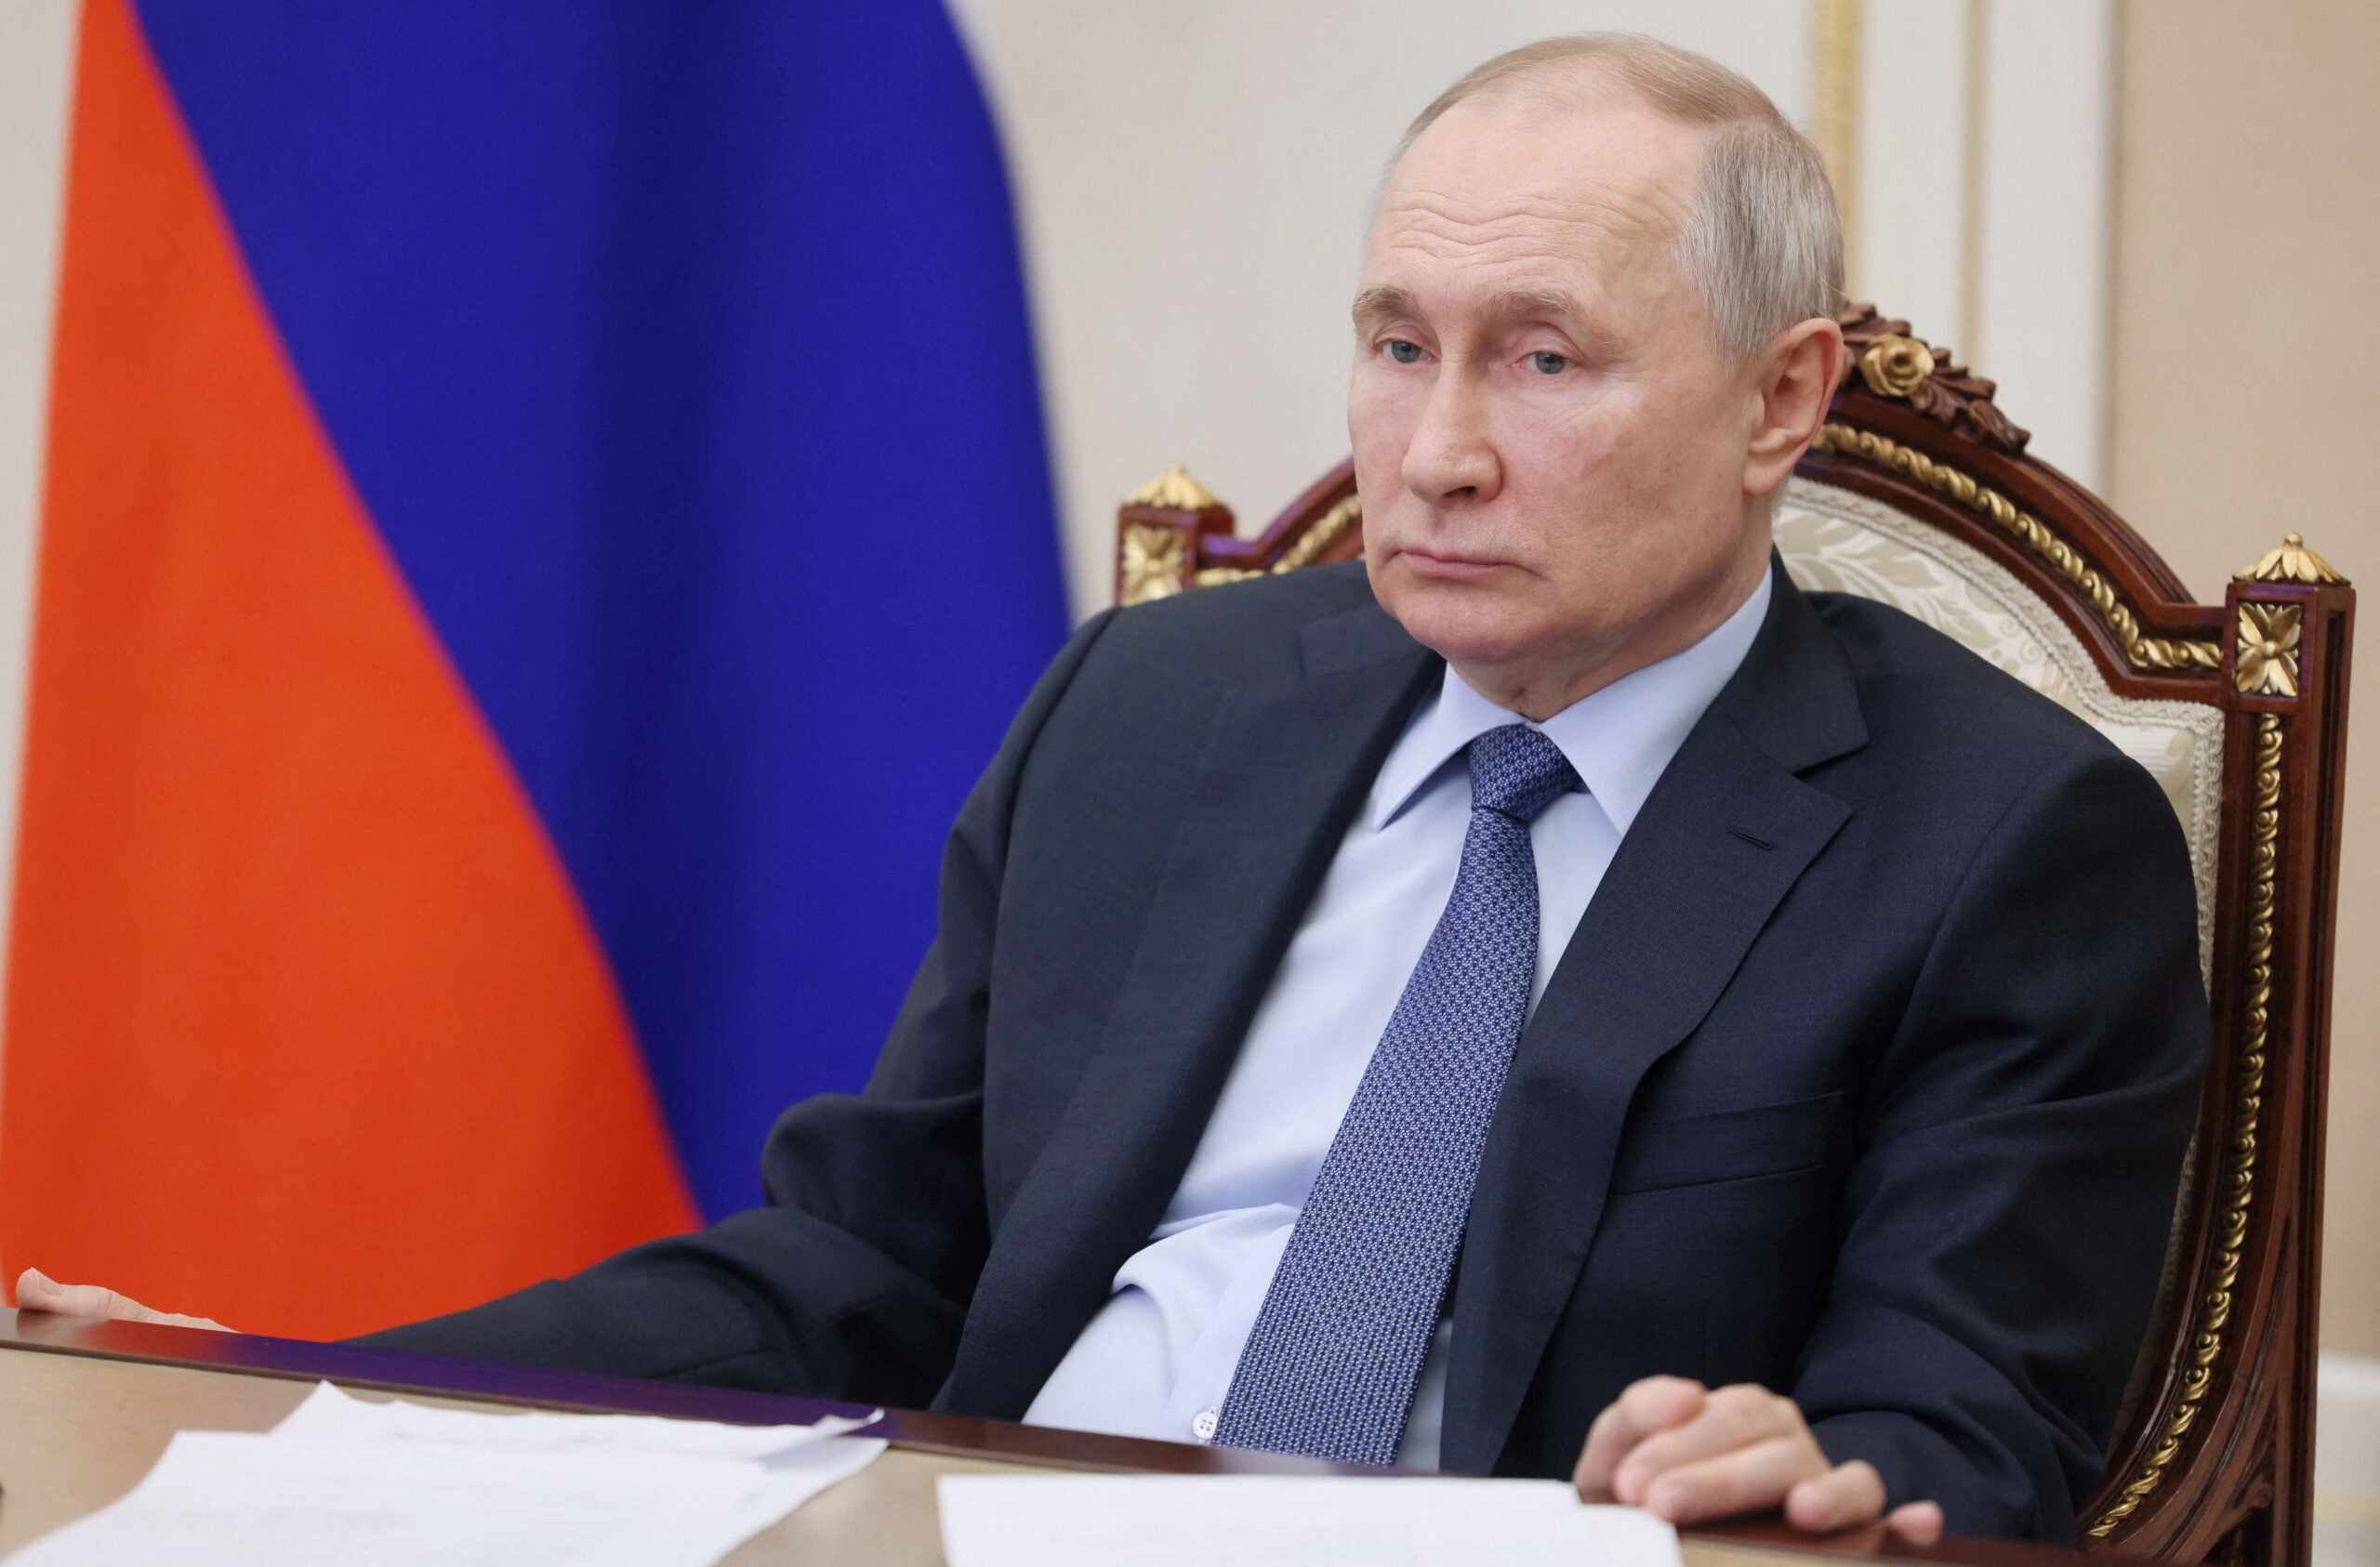 Russian President Vladimir Putin sits at a table, looking forlorn